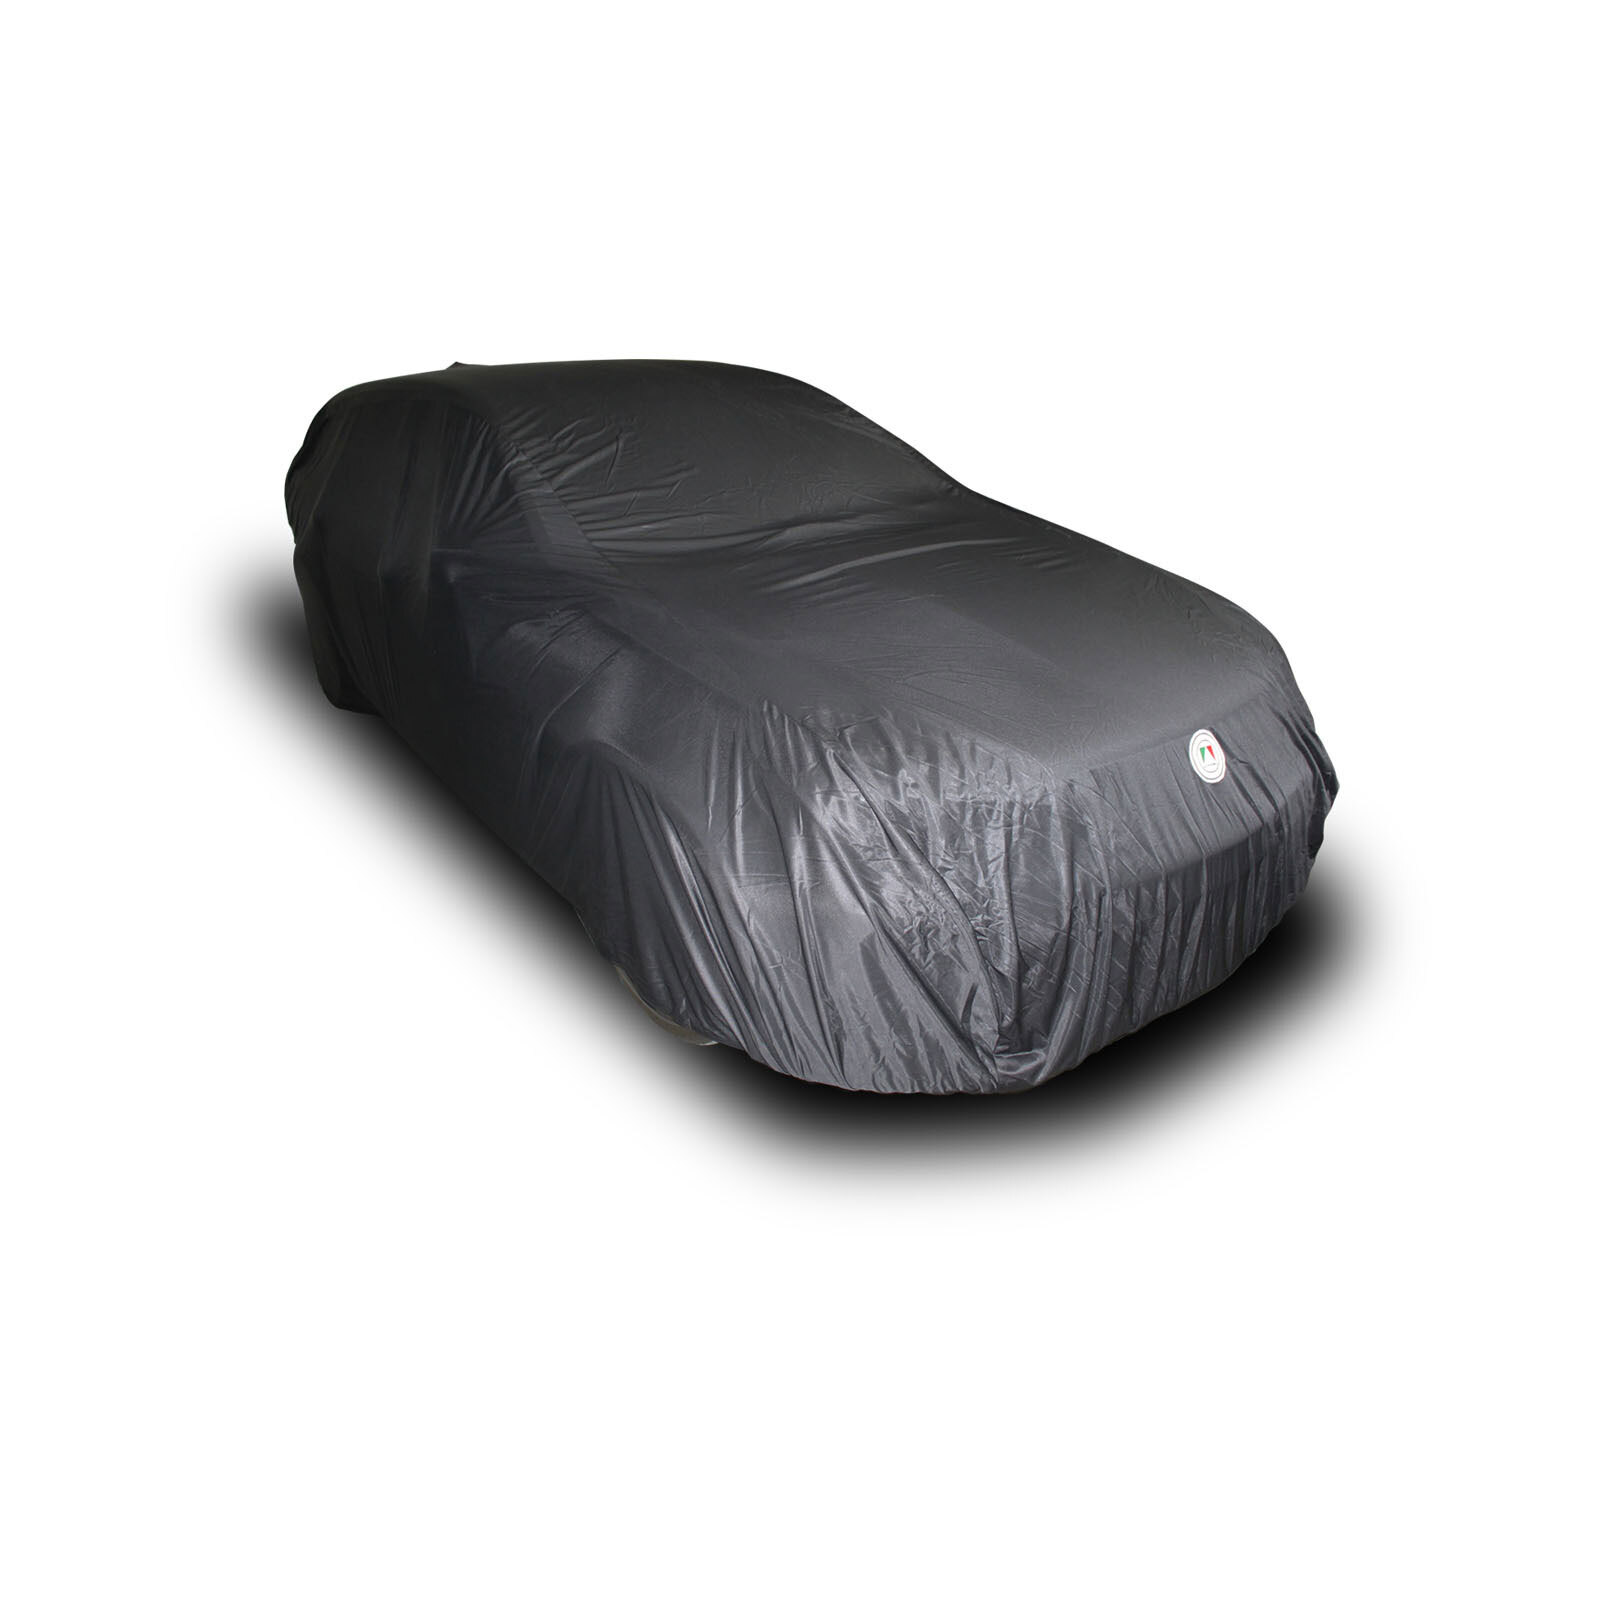 Autotecnica Waterproof Non Scratch Stormguard Car Cover fits Audi